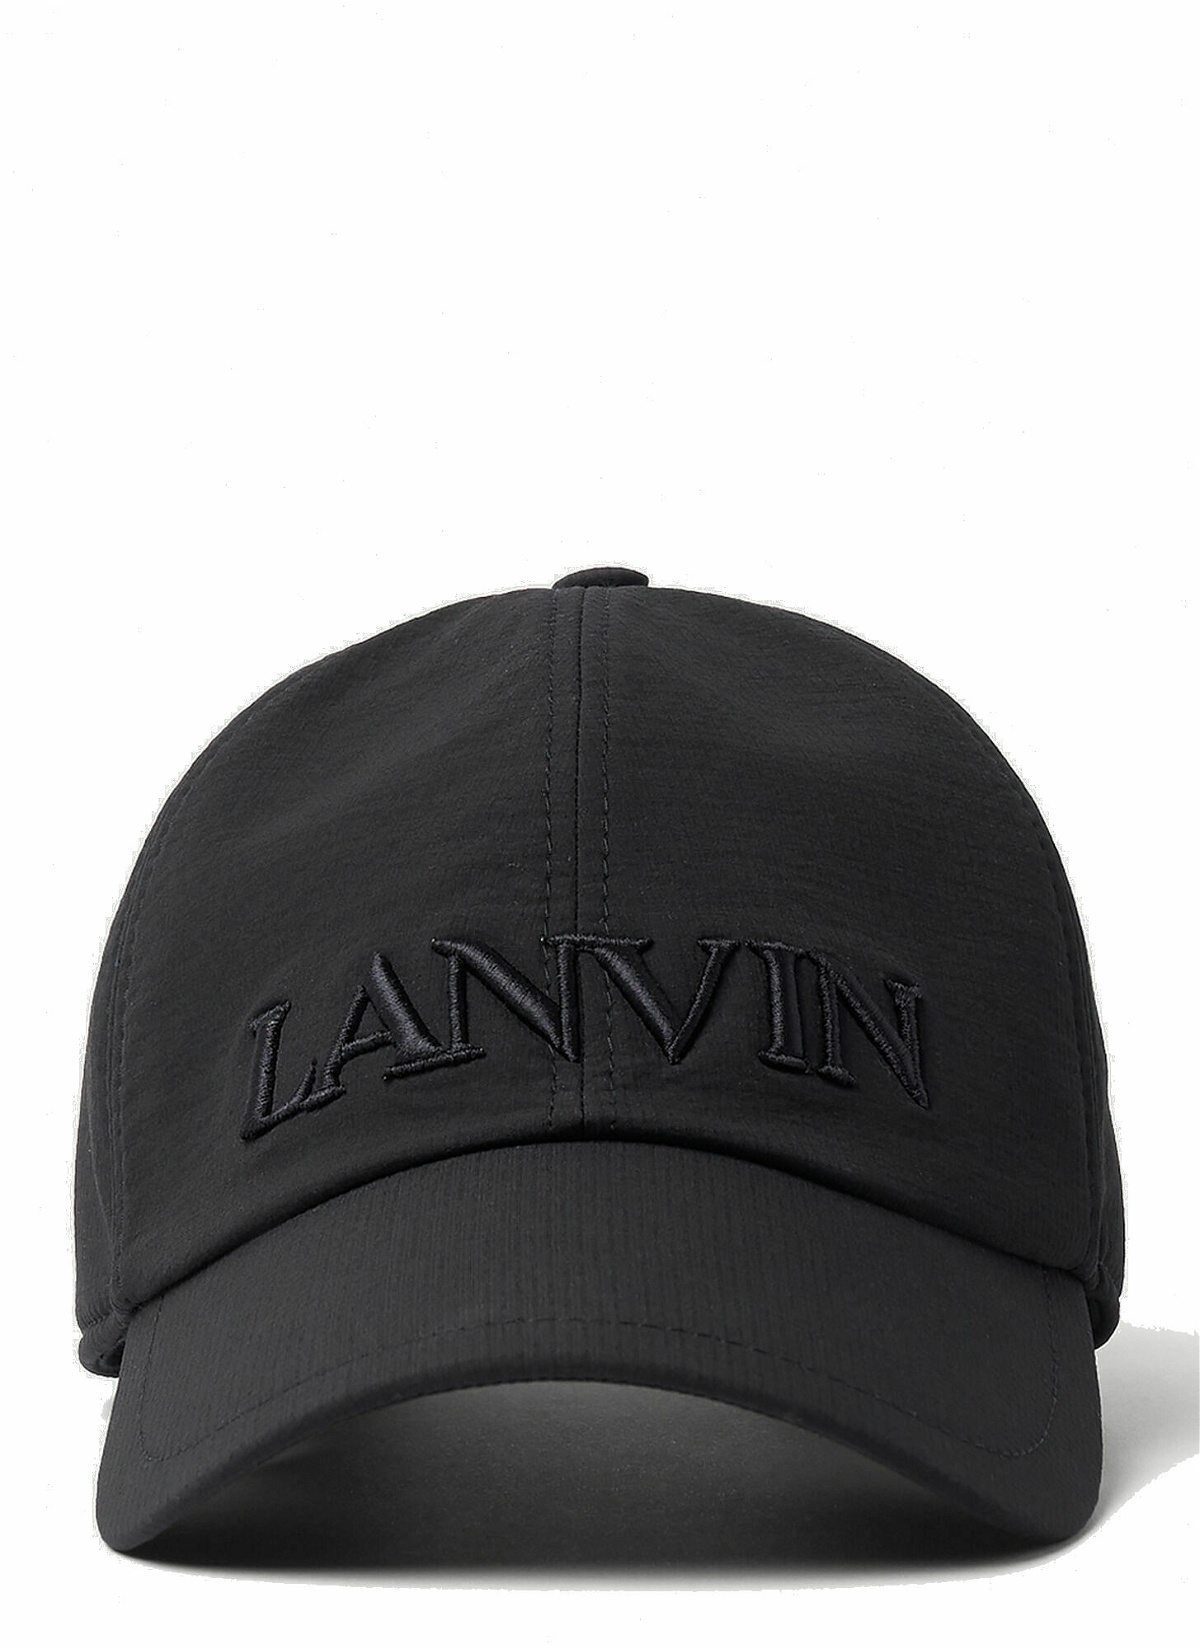 Lanvin - Logo Embroidery Baseball Cap in Black Lanvin